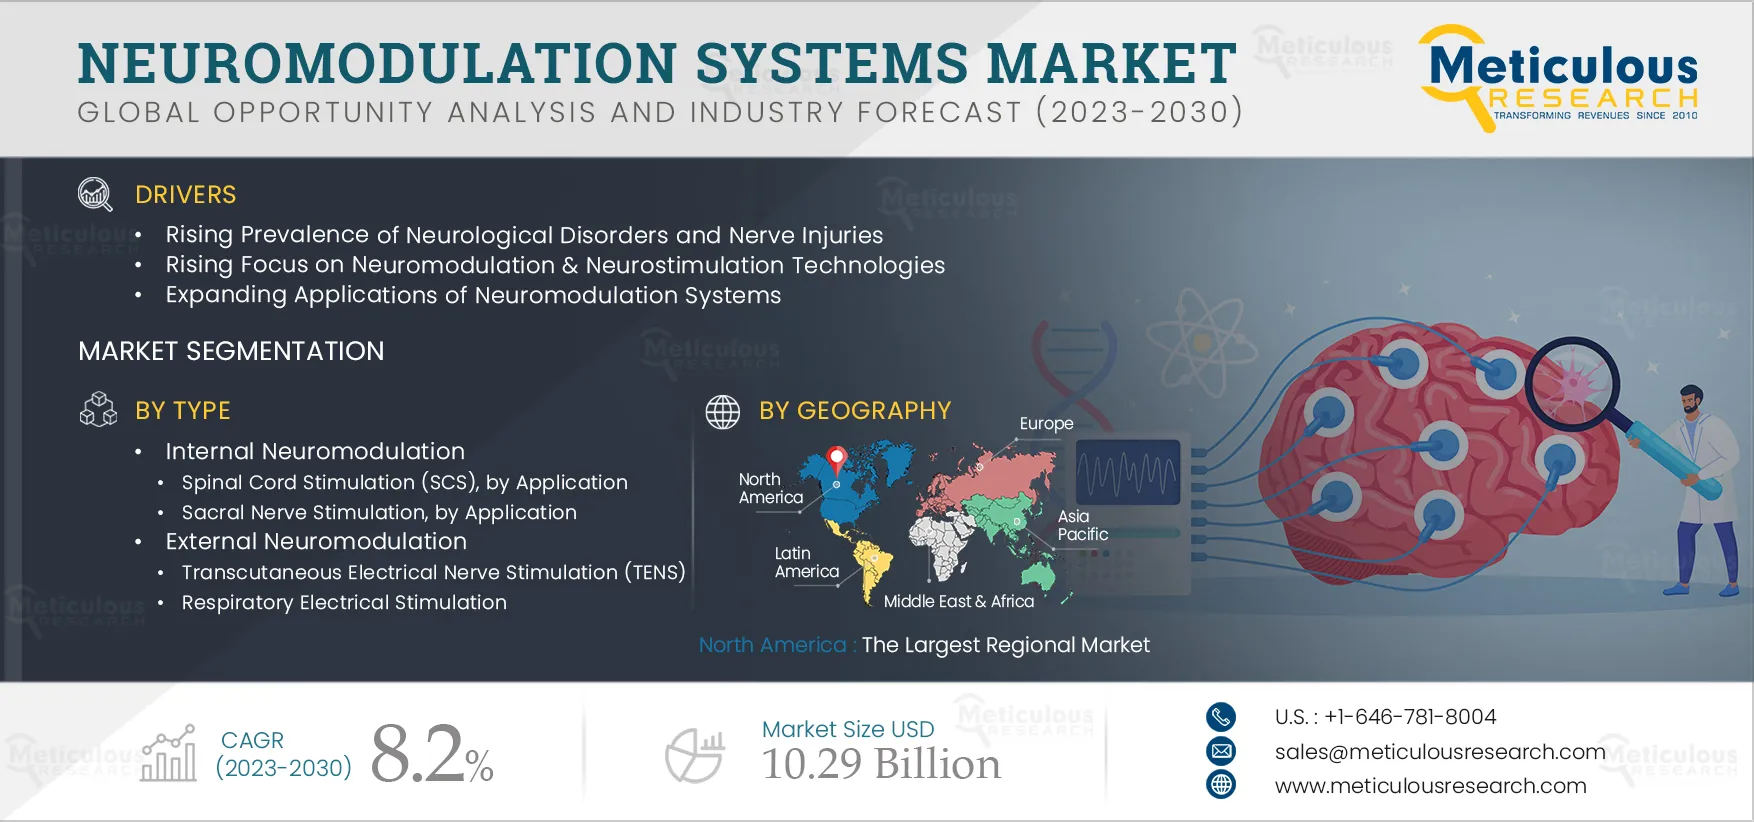 Neuromodulation Systems Market